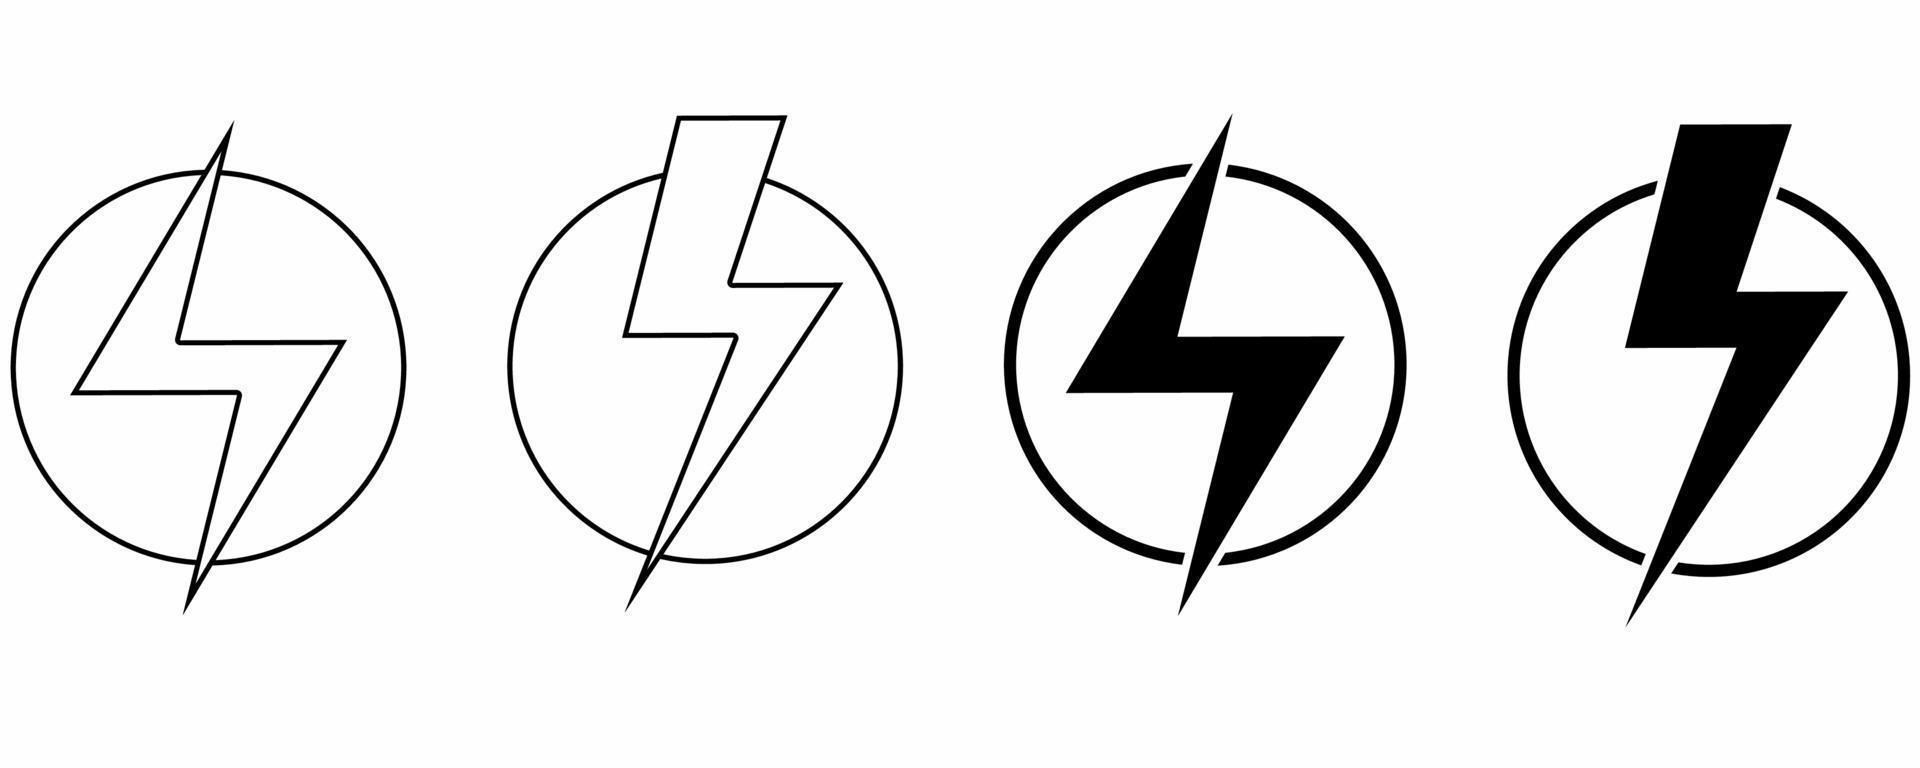 outline silhouette Lightning bolt icon set isolated on white background vector